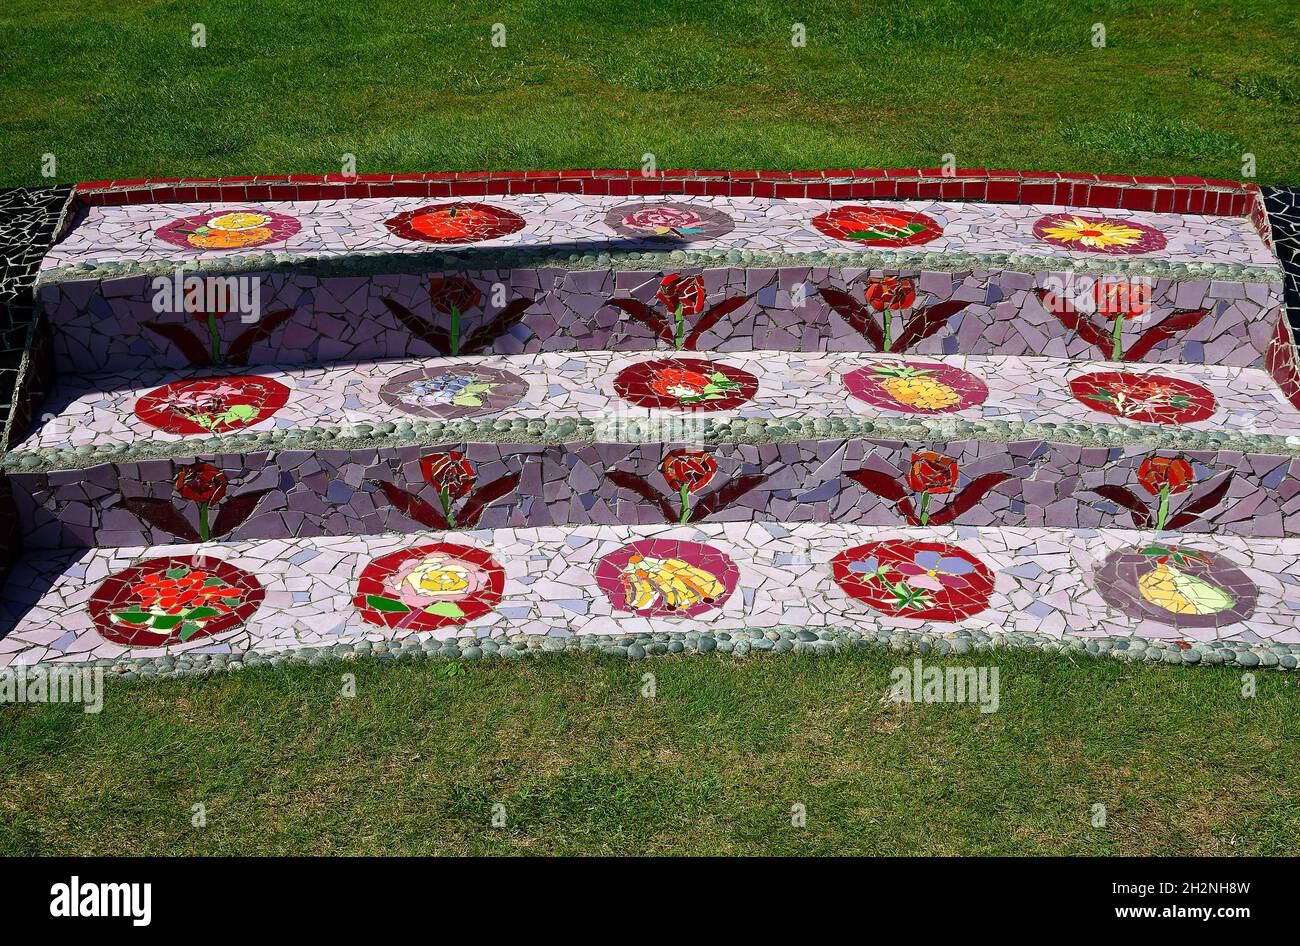 3 mosaic steps, ceramic tile fragments, flower motif, colorful, creative, grass, garden, artistic, The Giants House, Akaroa; New Zealand Stock Photo